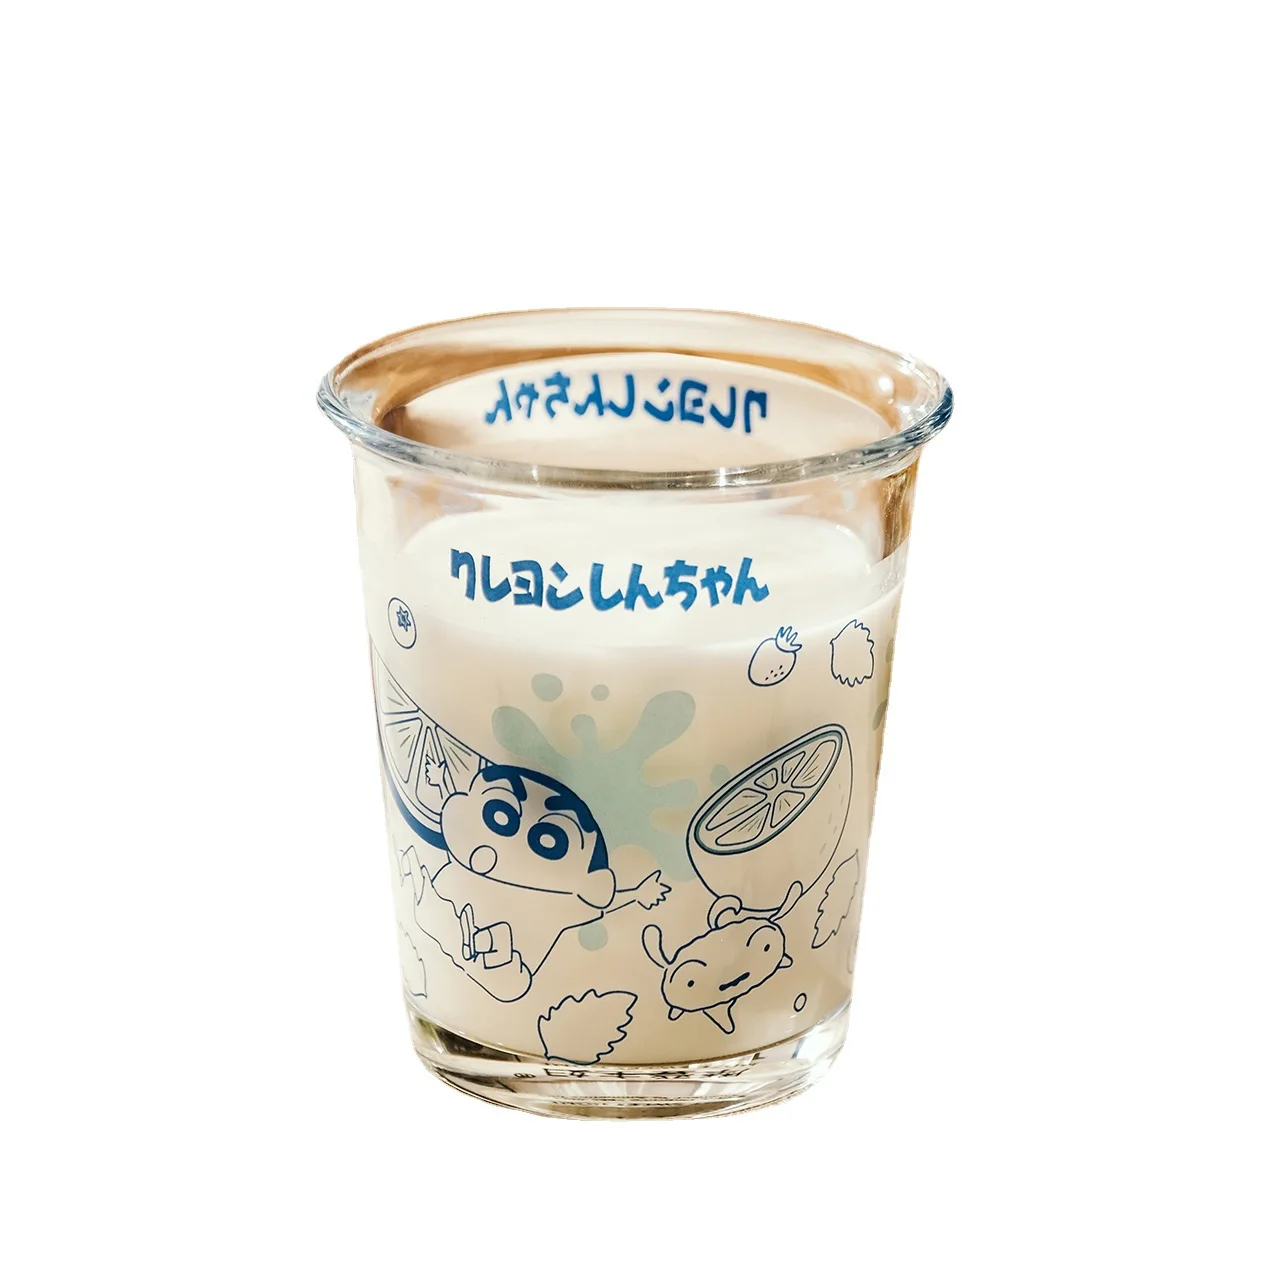 Crayon Shin-chan Kawaii Buriburizaemon xiaobai Ins Vento Copo de Água em Casa Copos de Suco de Bebidas, Copos de Café